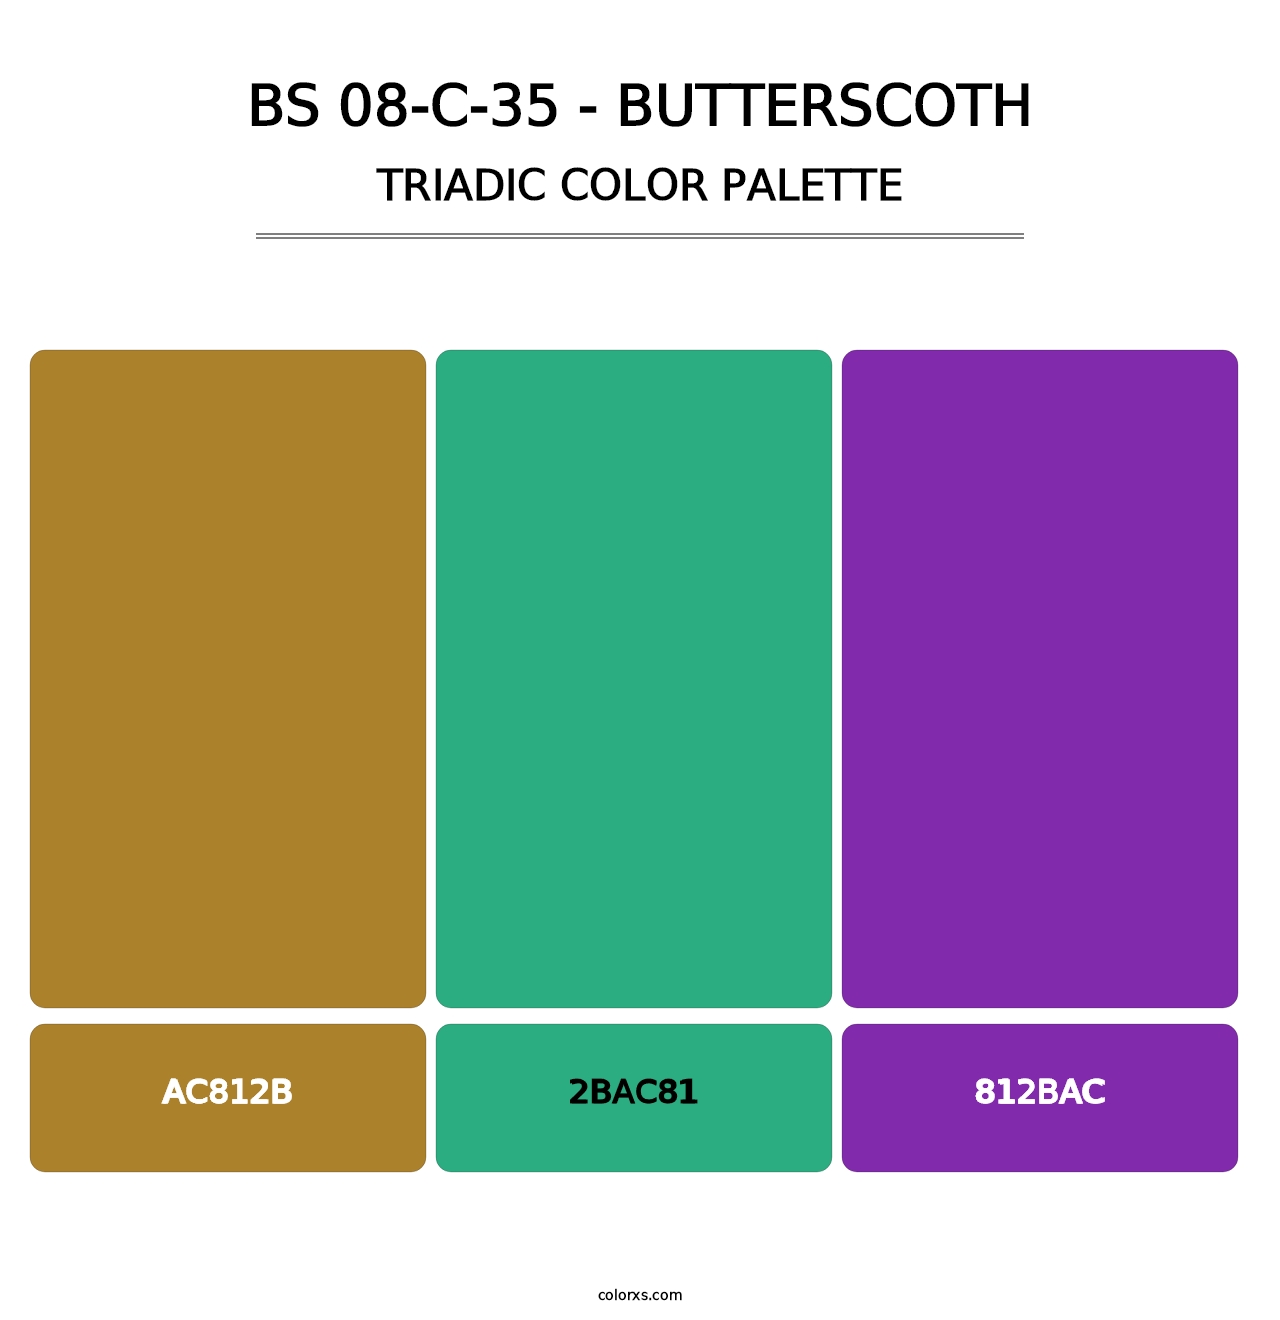 BS 08-C-35 - Butterscoth - Triadic Color Palette